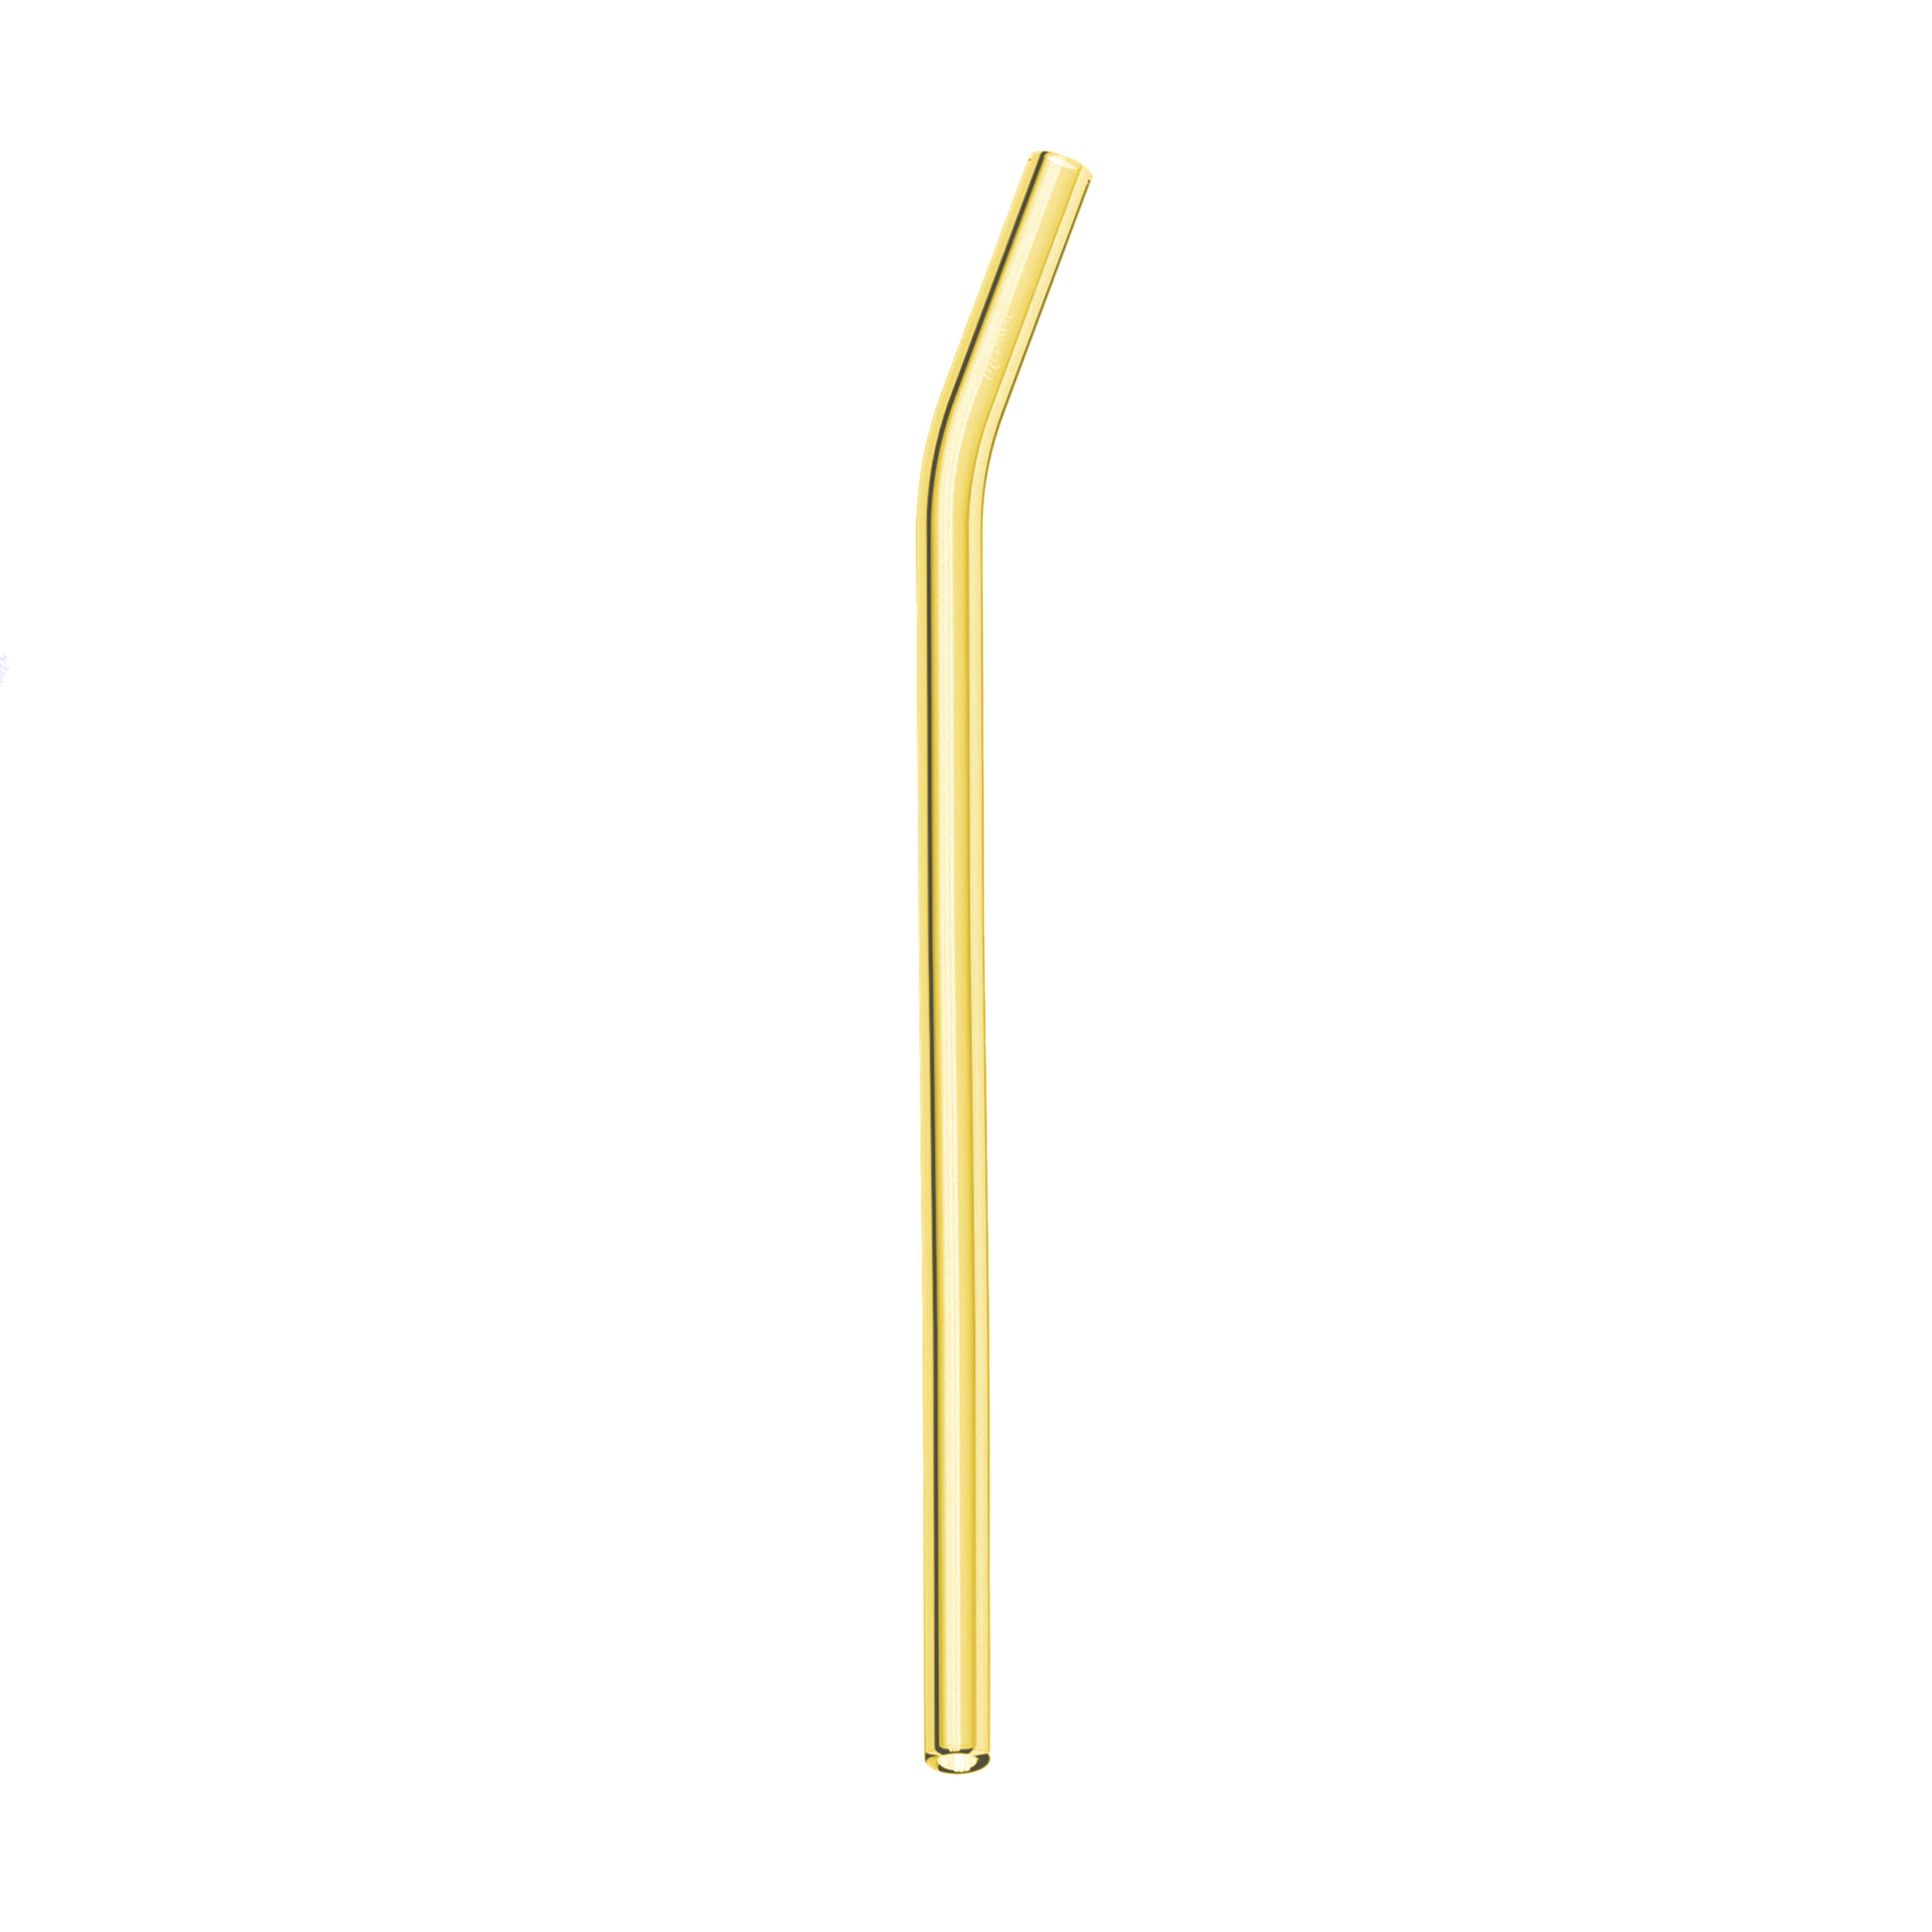 Glass Straws, Mermaid Straw, Reusable Straw, yellow glass curved single